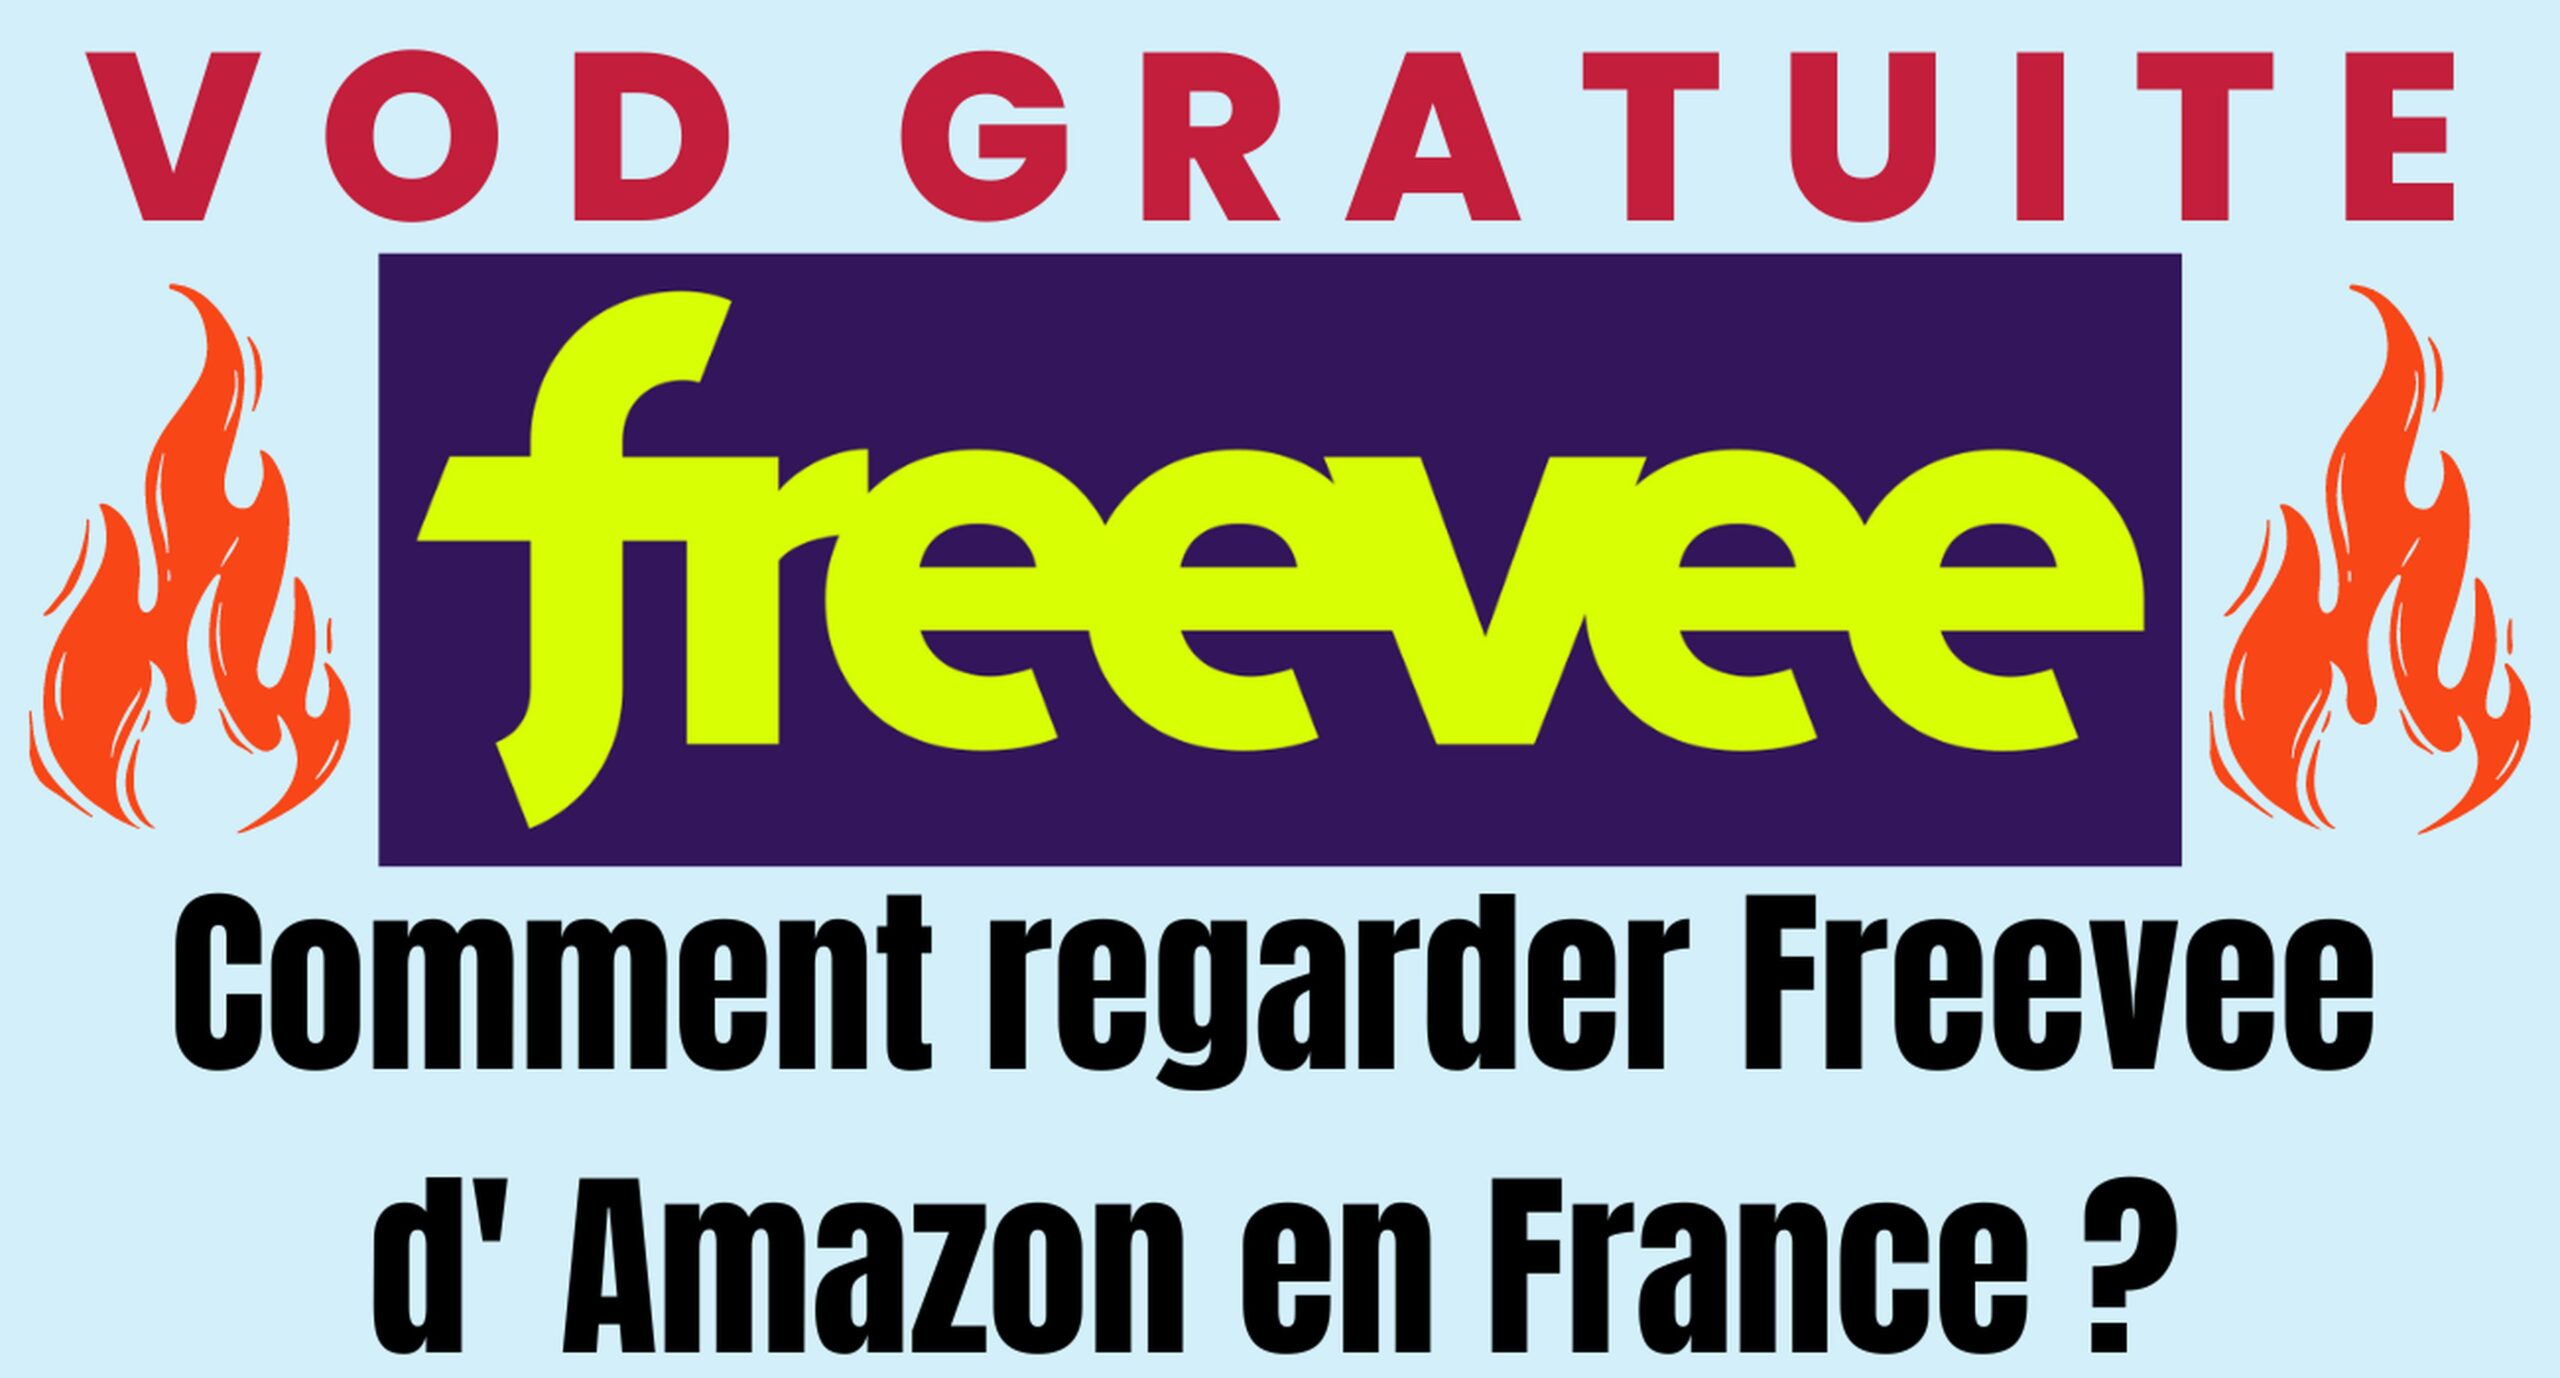 Freevee VOD - Service de streaming gratuit d’ Amazon 6